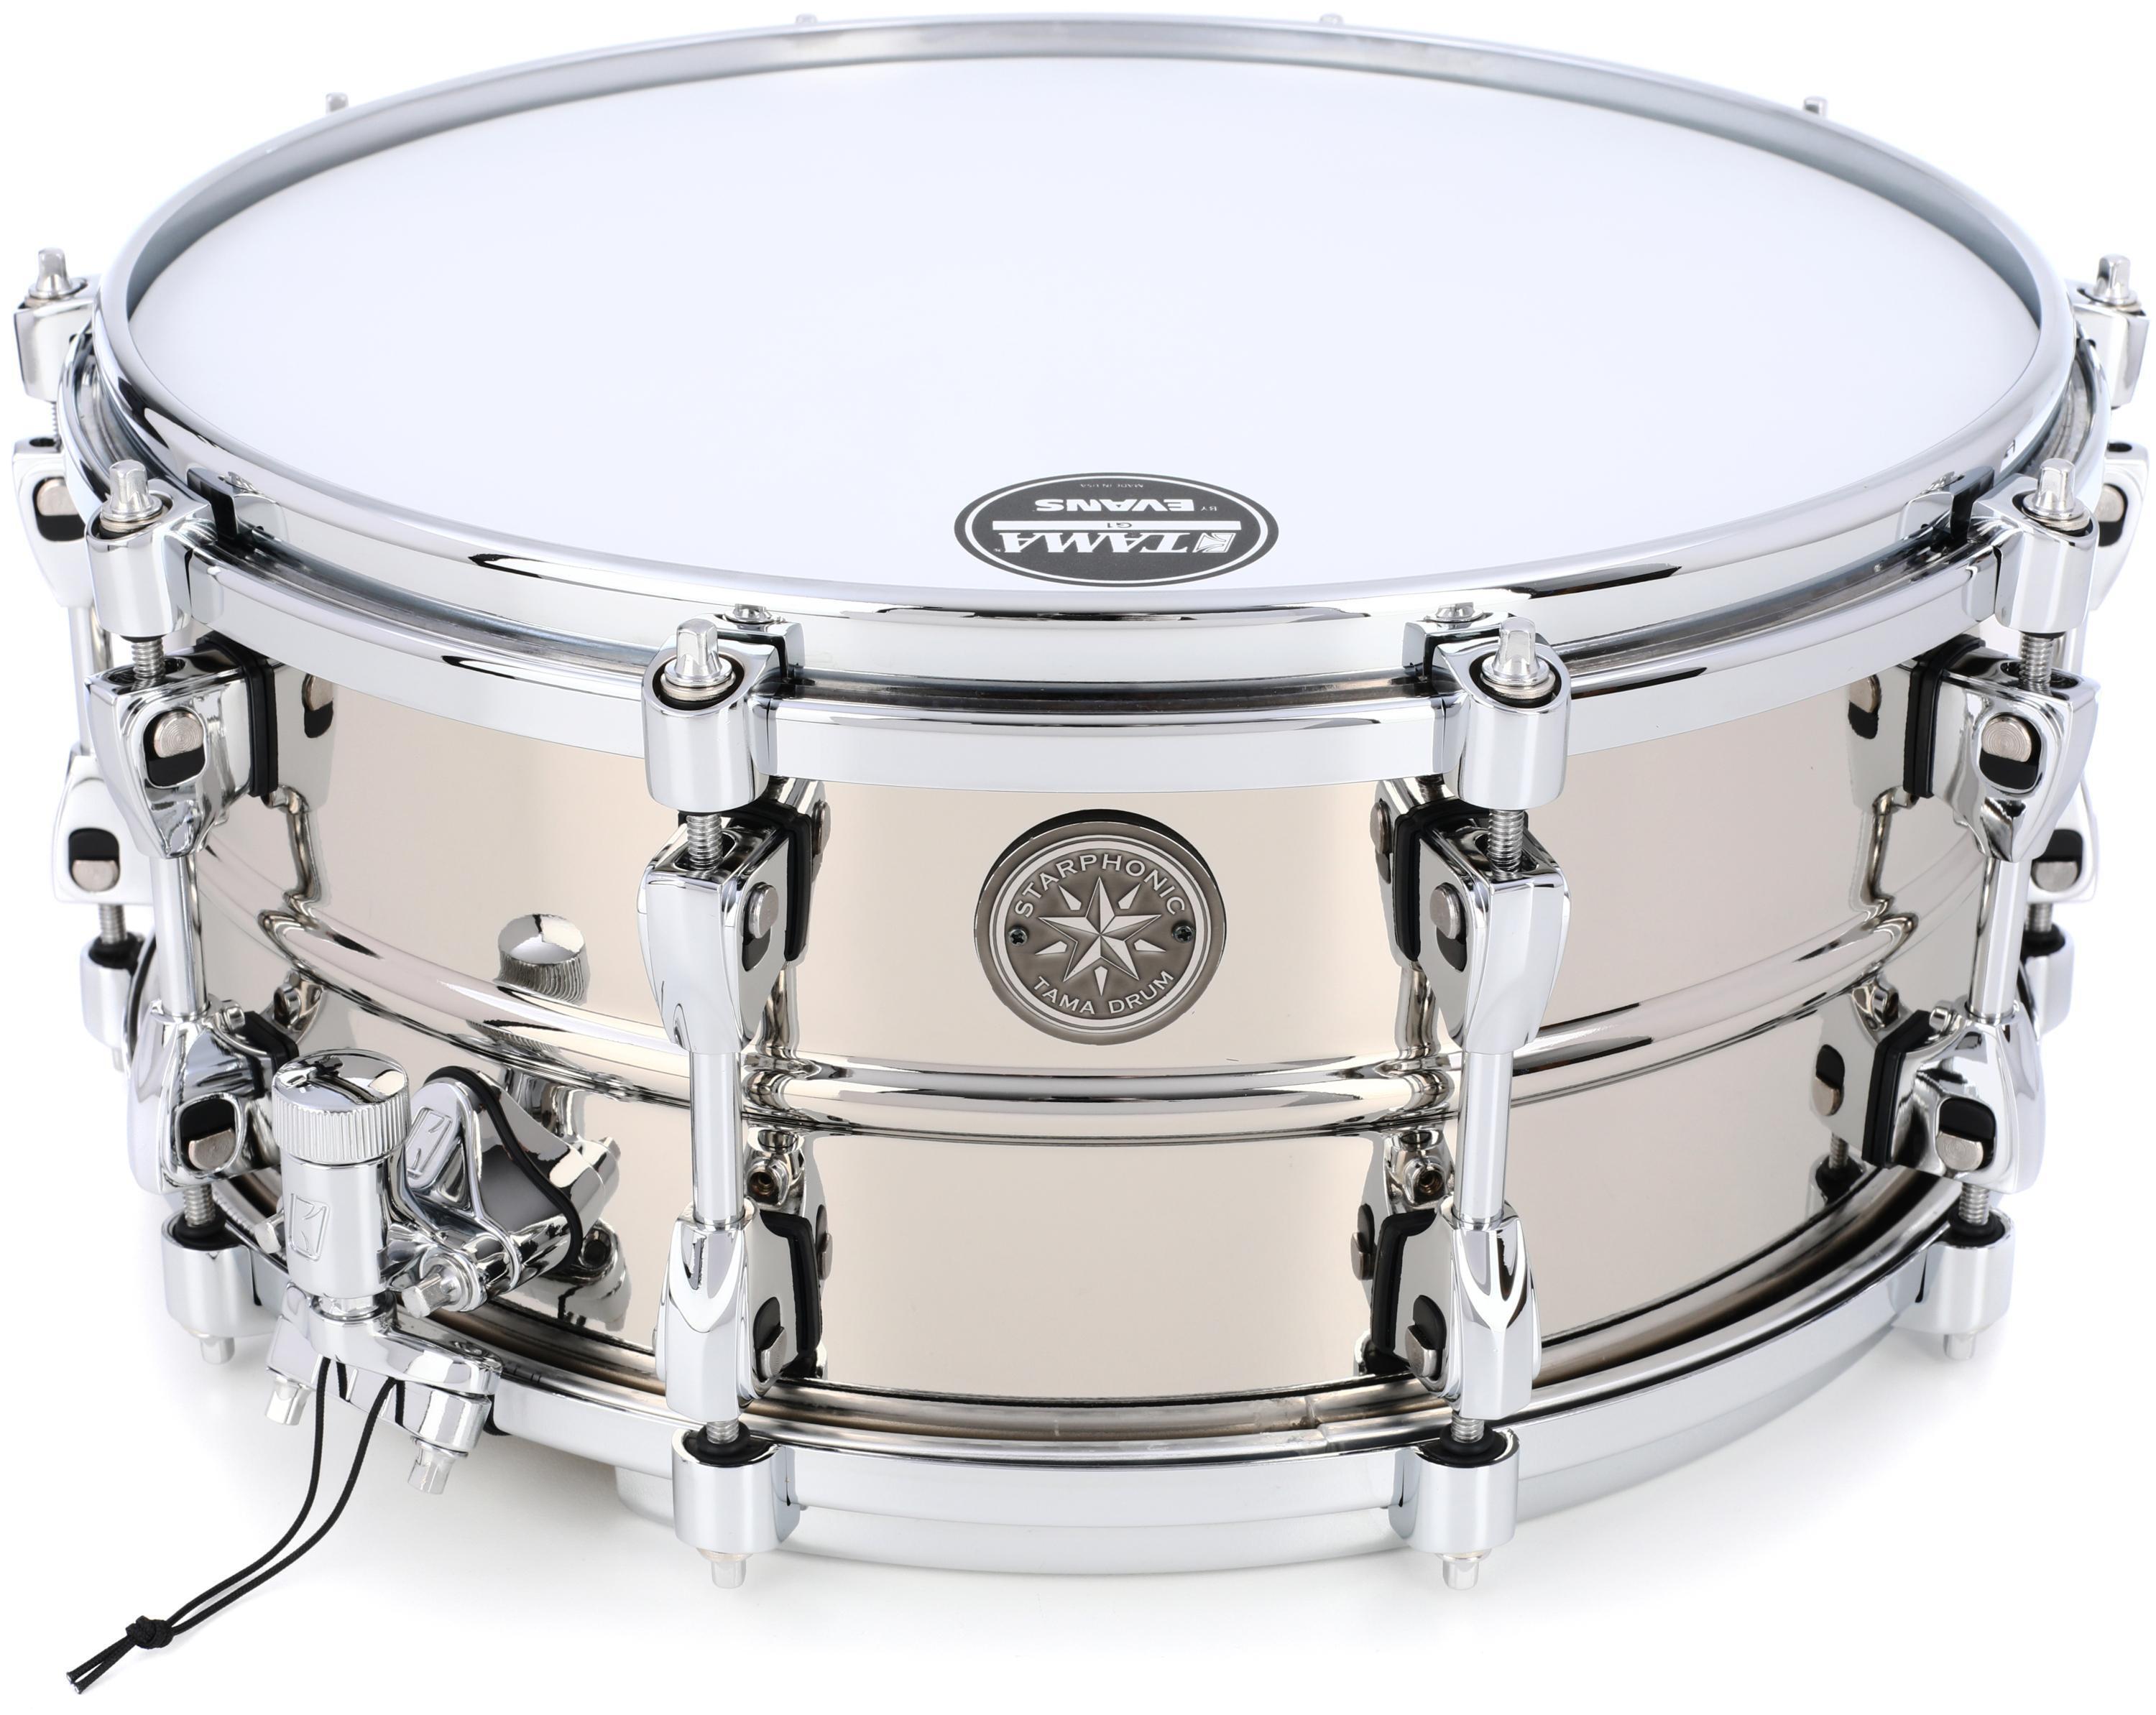 Tama Starphonic Series Snare Drum - 6 x 14 inch - Nickel Plated Brass